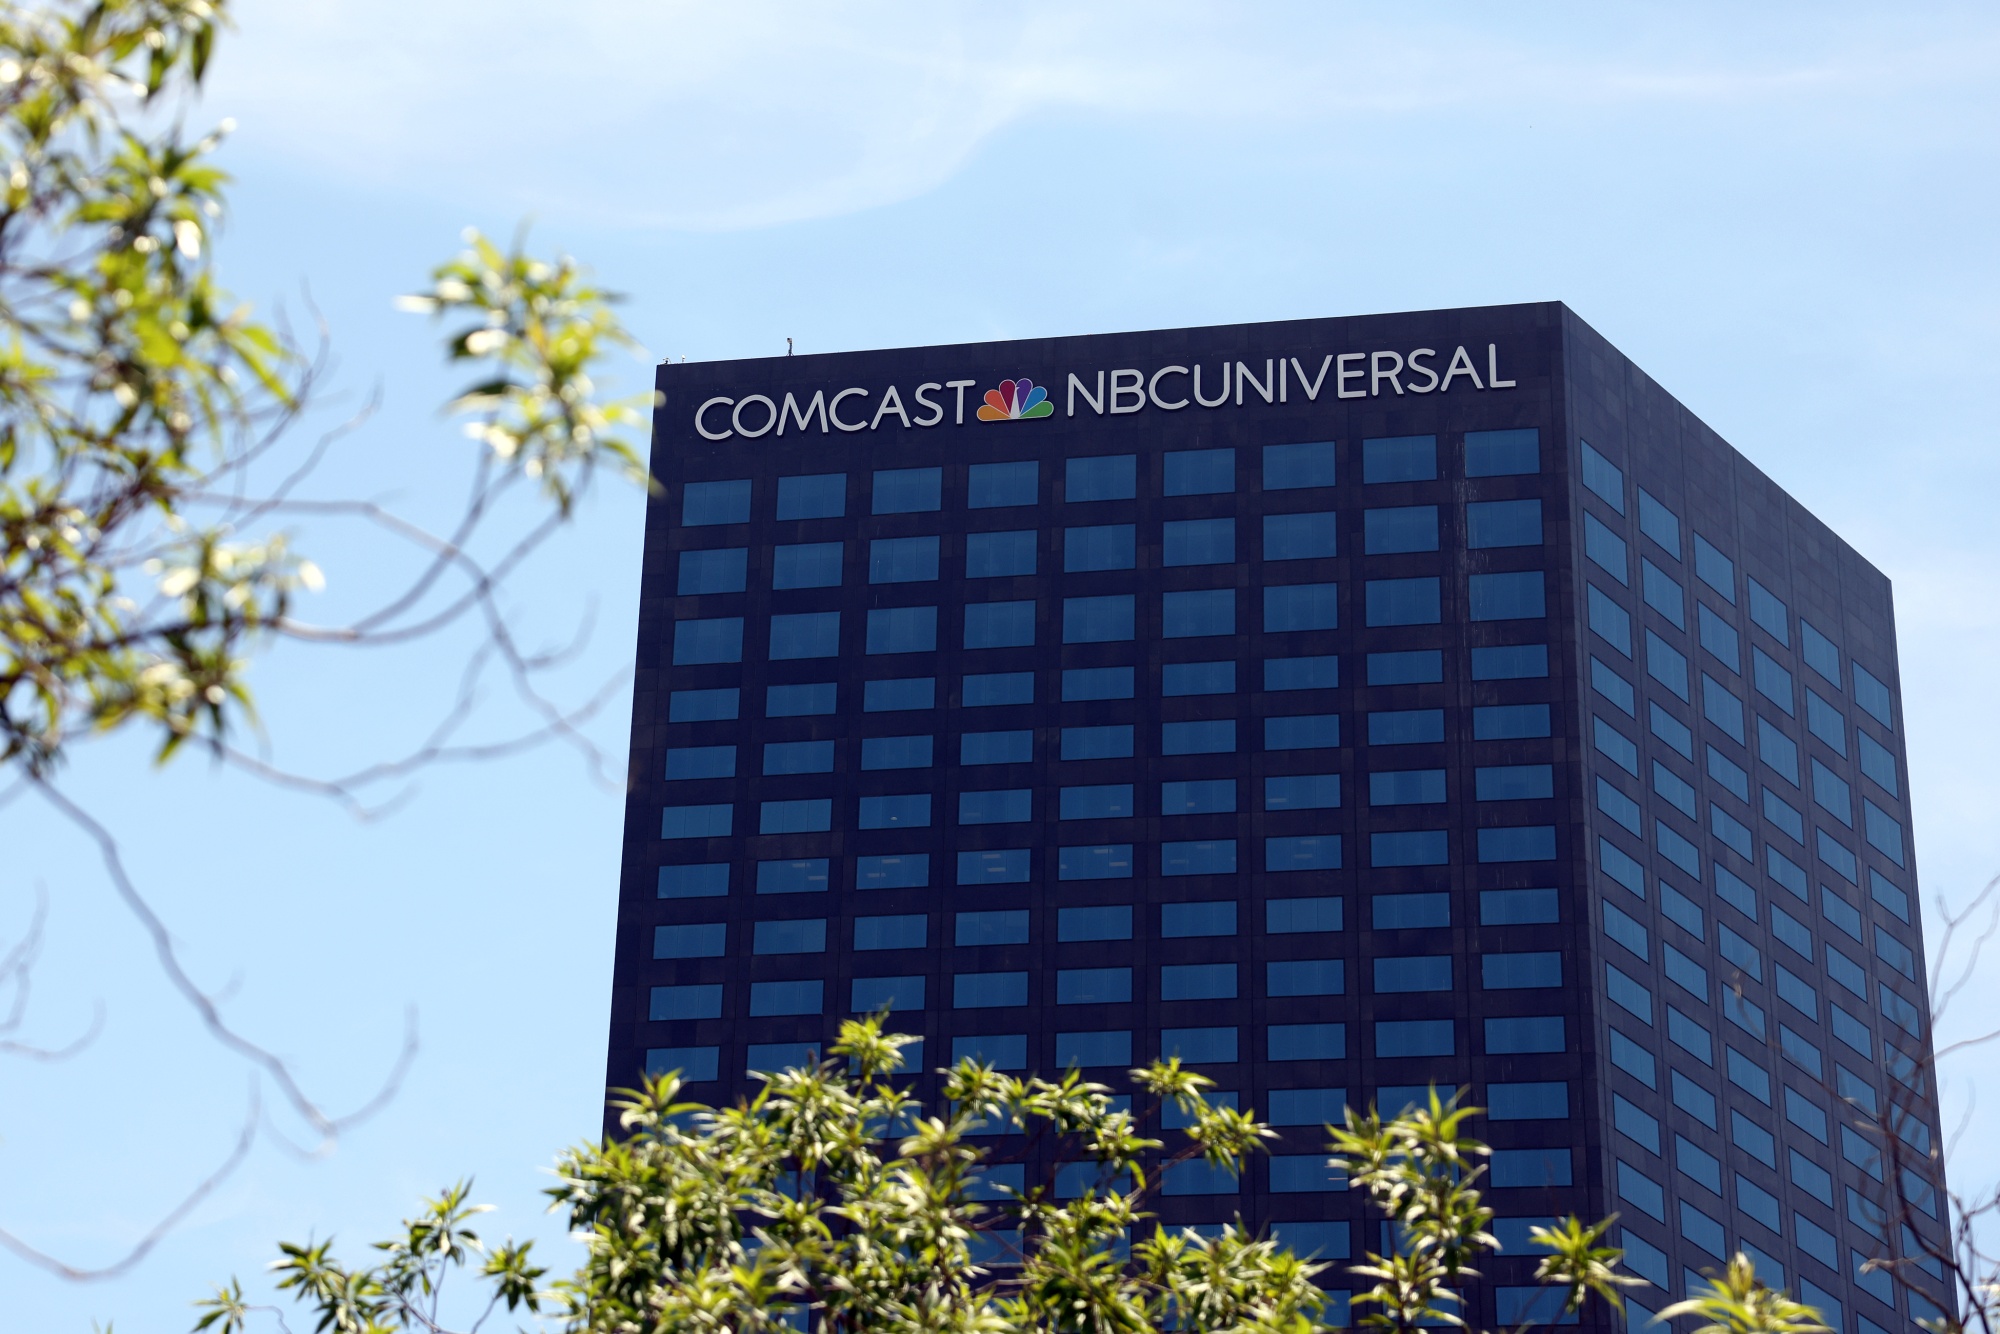 bad companies - nbc universal corporation - Comcast Nbcuniversal